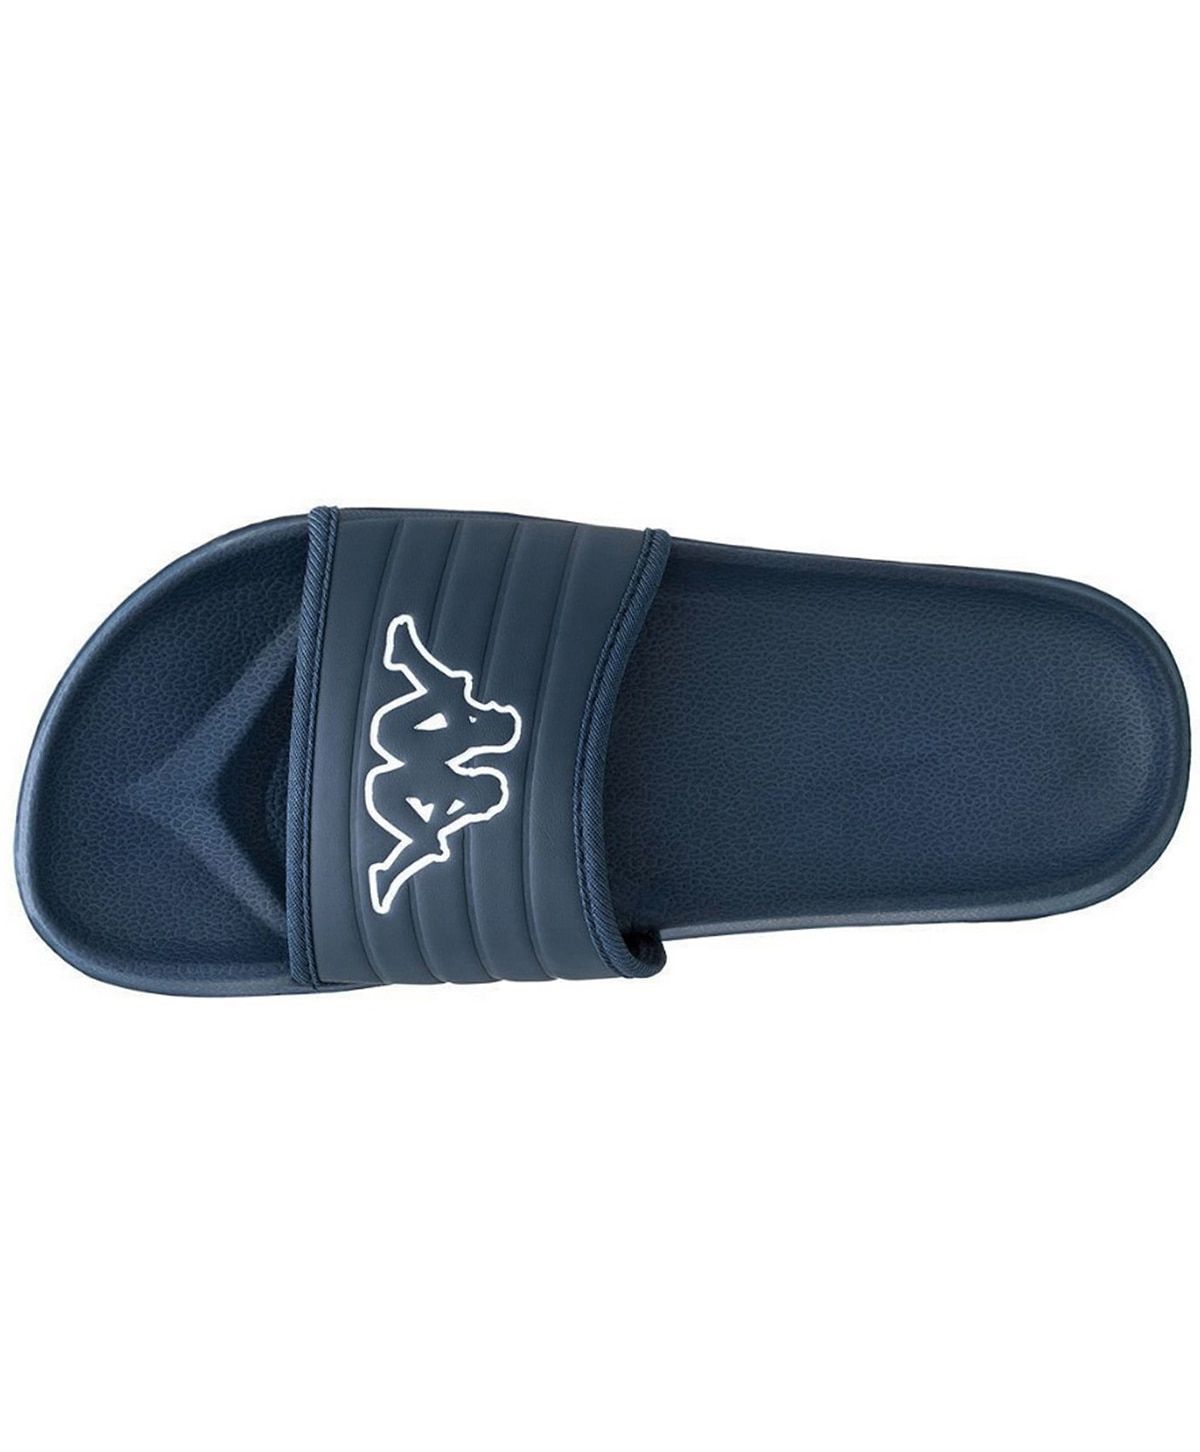 Kappa Lablo slippers